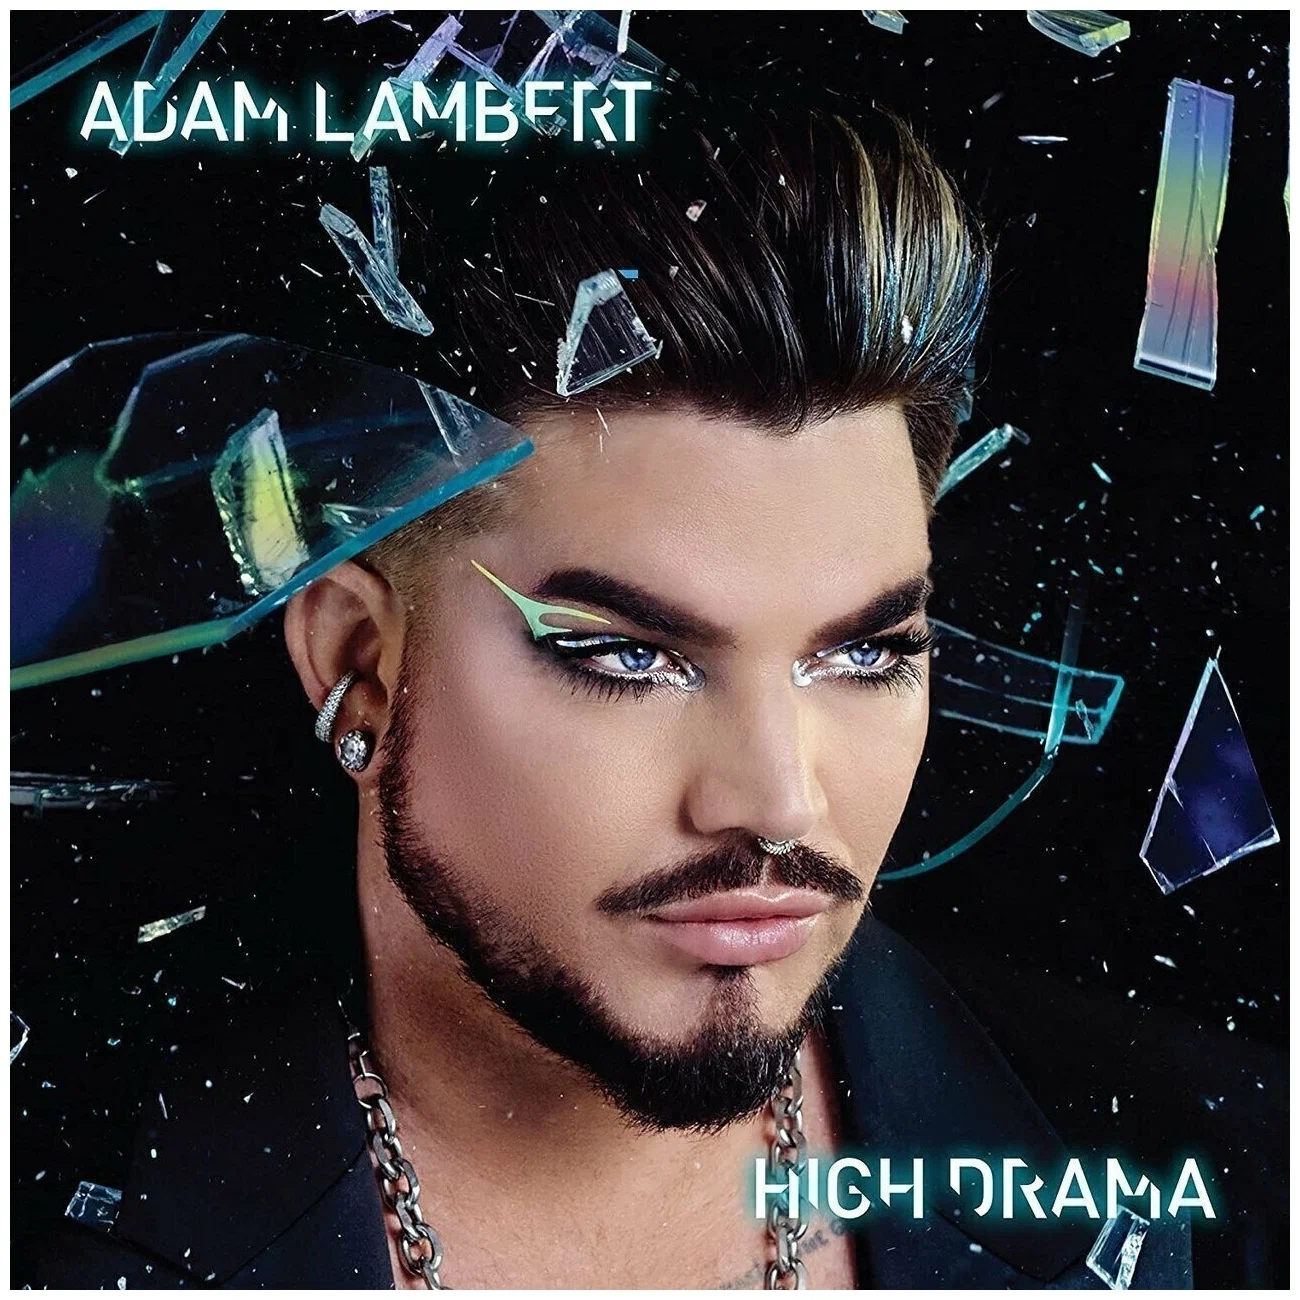 Виниловая Пластинка Lambert, Adam, High Drama (5054197308611) виниловая пластинка adam lambert high drama clear lp